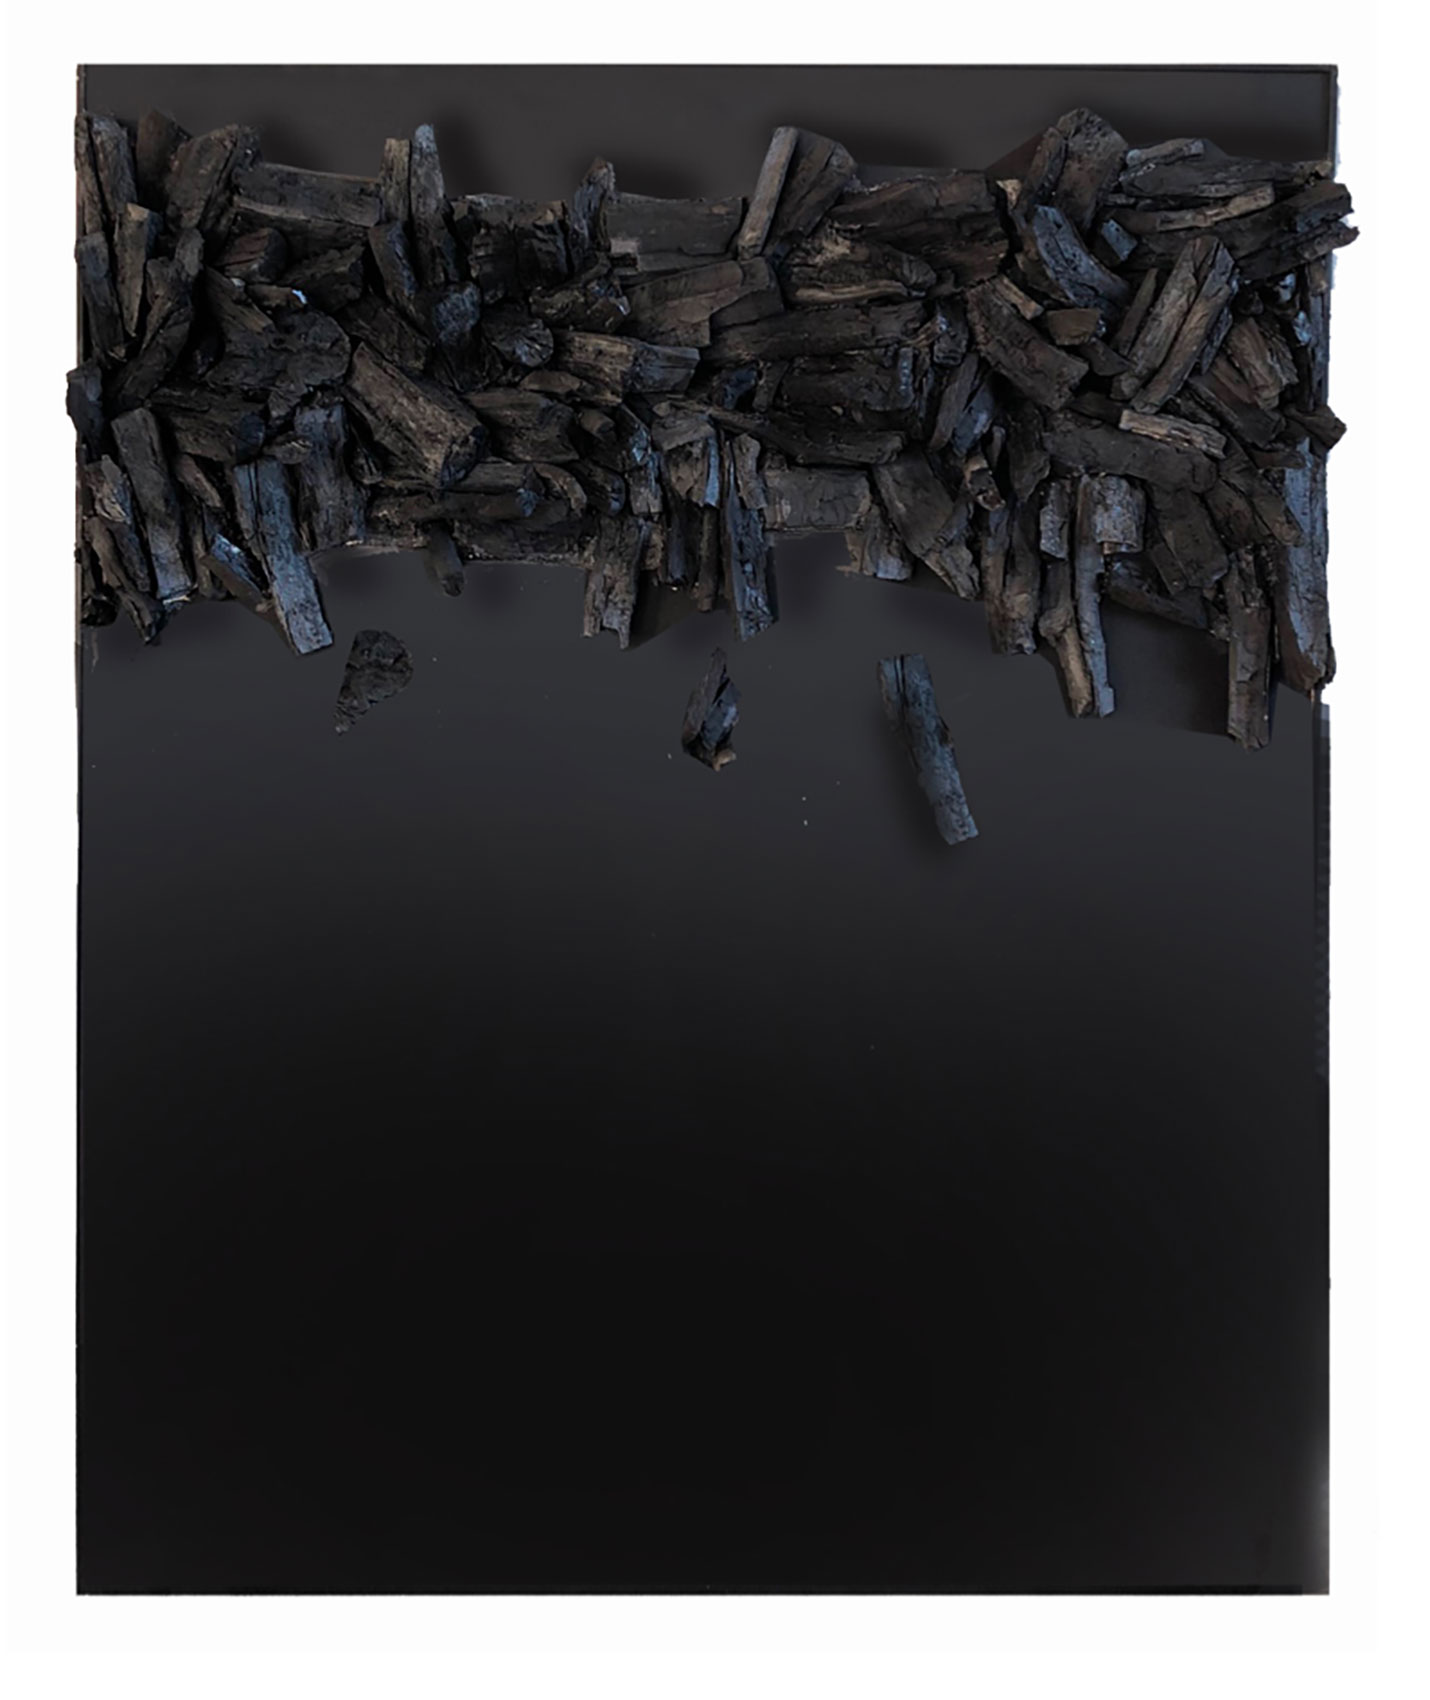 « BLACK GOLD»
Year: 2022
Medium: Charcoal on wood
Dimensions: 150 x 120 x 12 cm